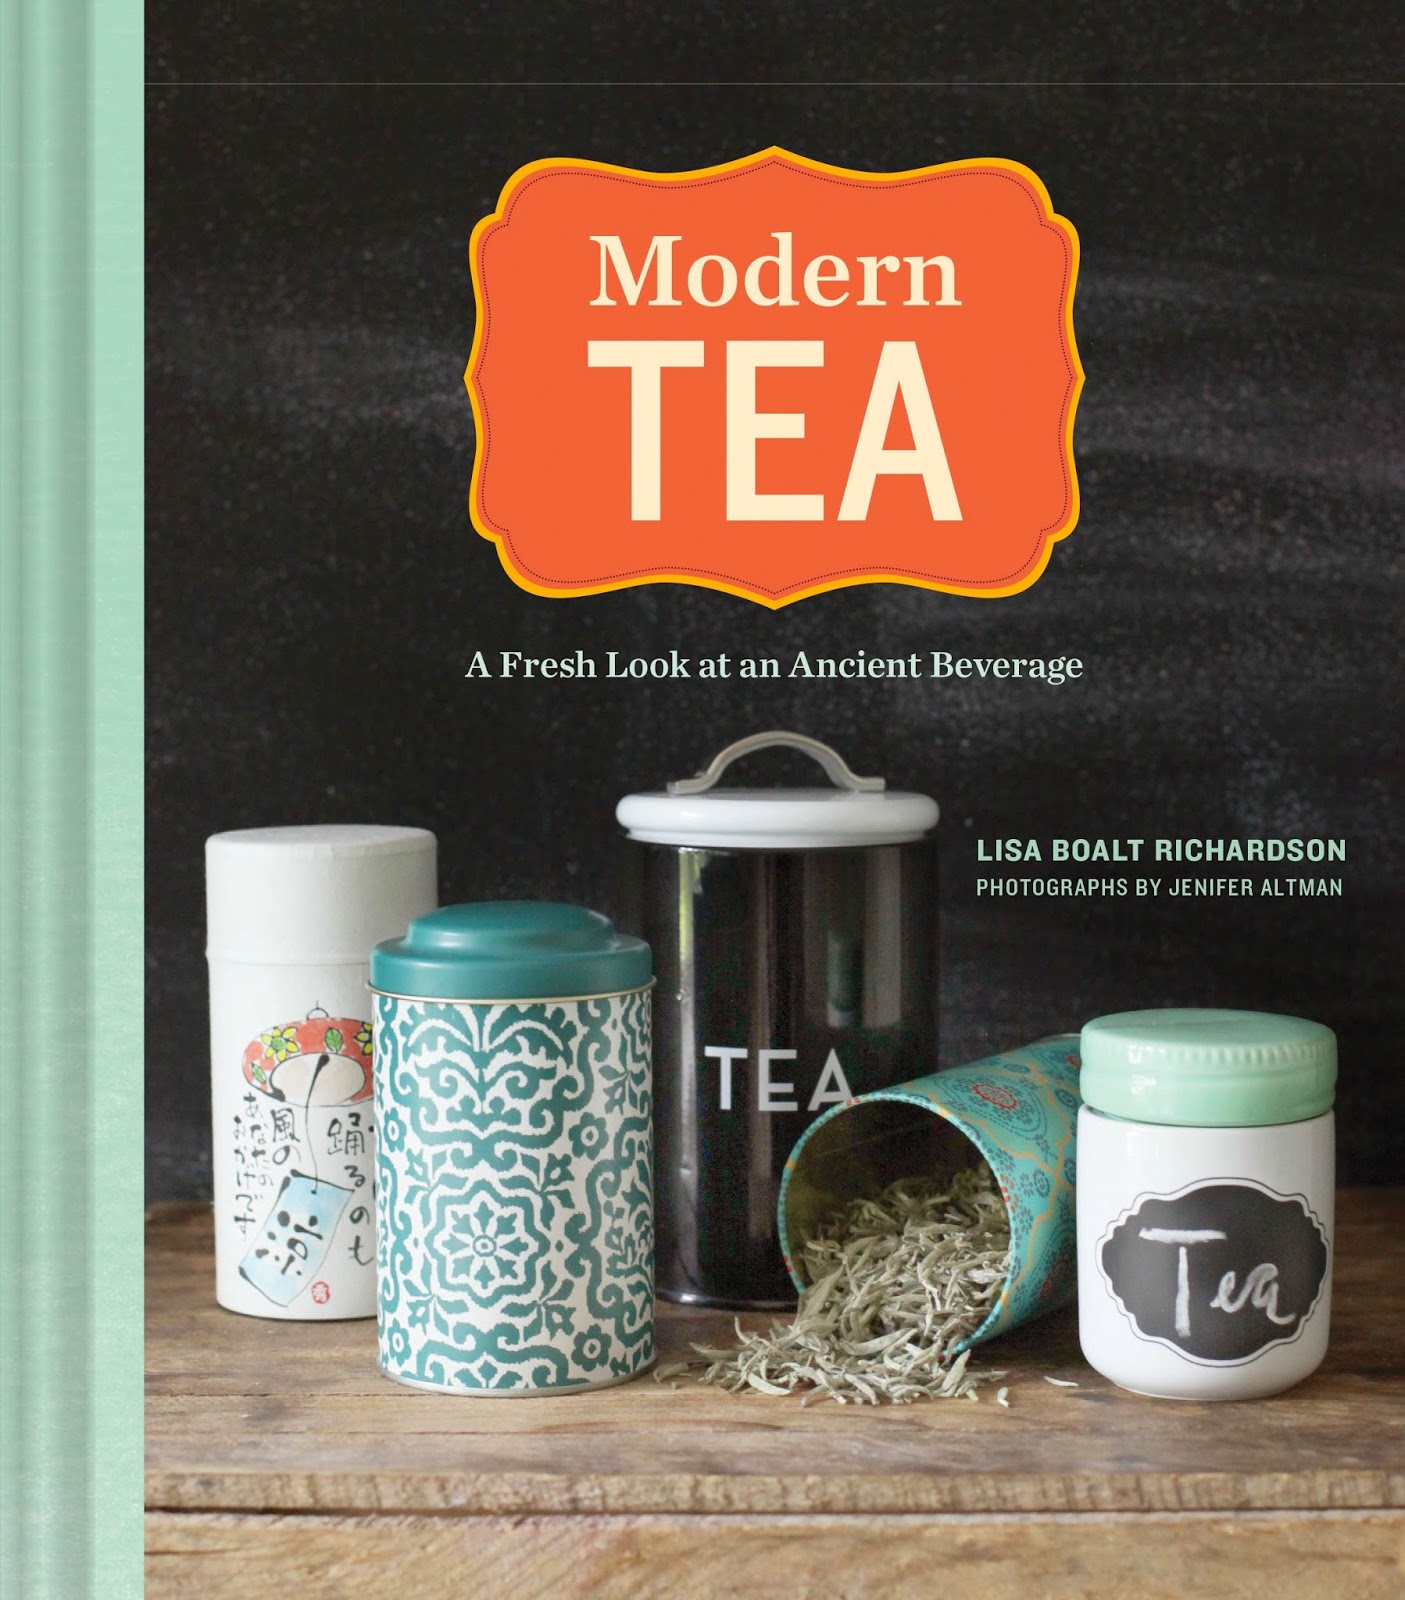 Modern Tea by Lisa Boalt Richardson